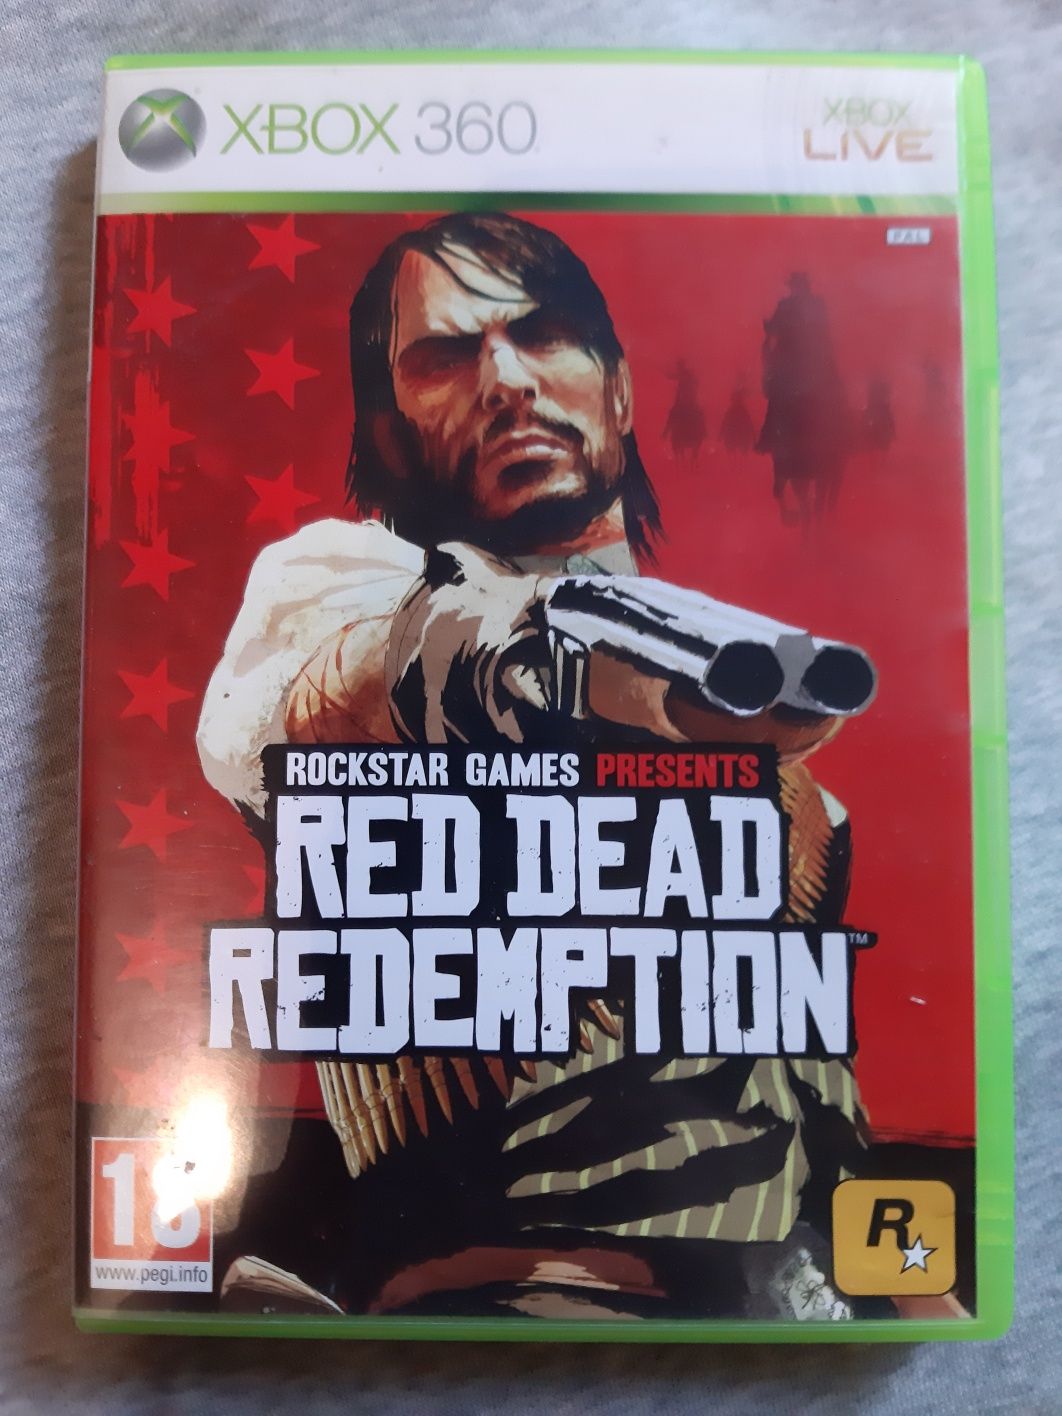 Red dead redemption xbox купить. Ред дед редемпшн хбокс 360. Red Dead Redemption 1 Xbox 360. Red Dead Redemption 2 Xbox 360. Ред дед редемпшен 1 на Xbox 360.